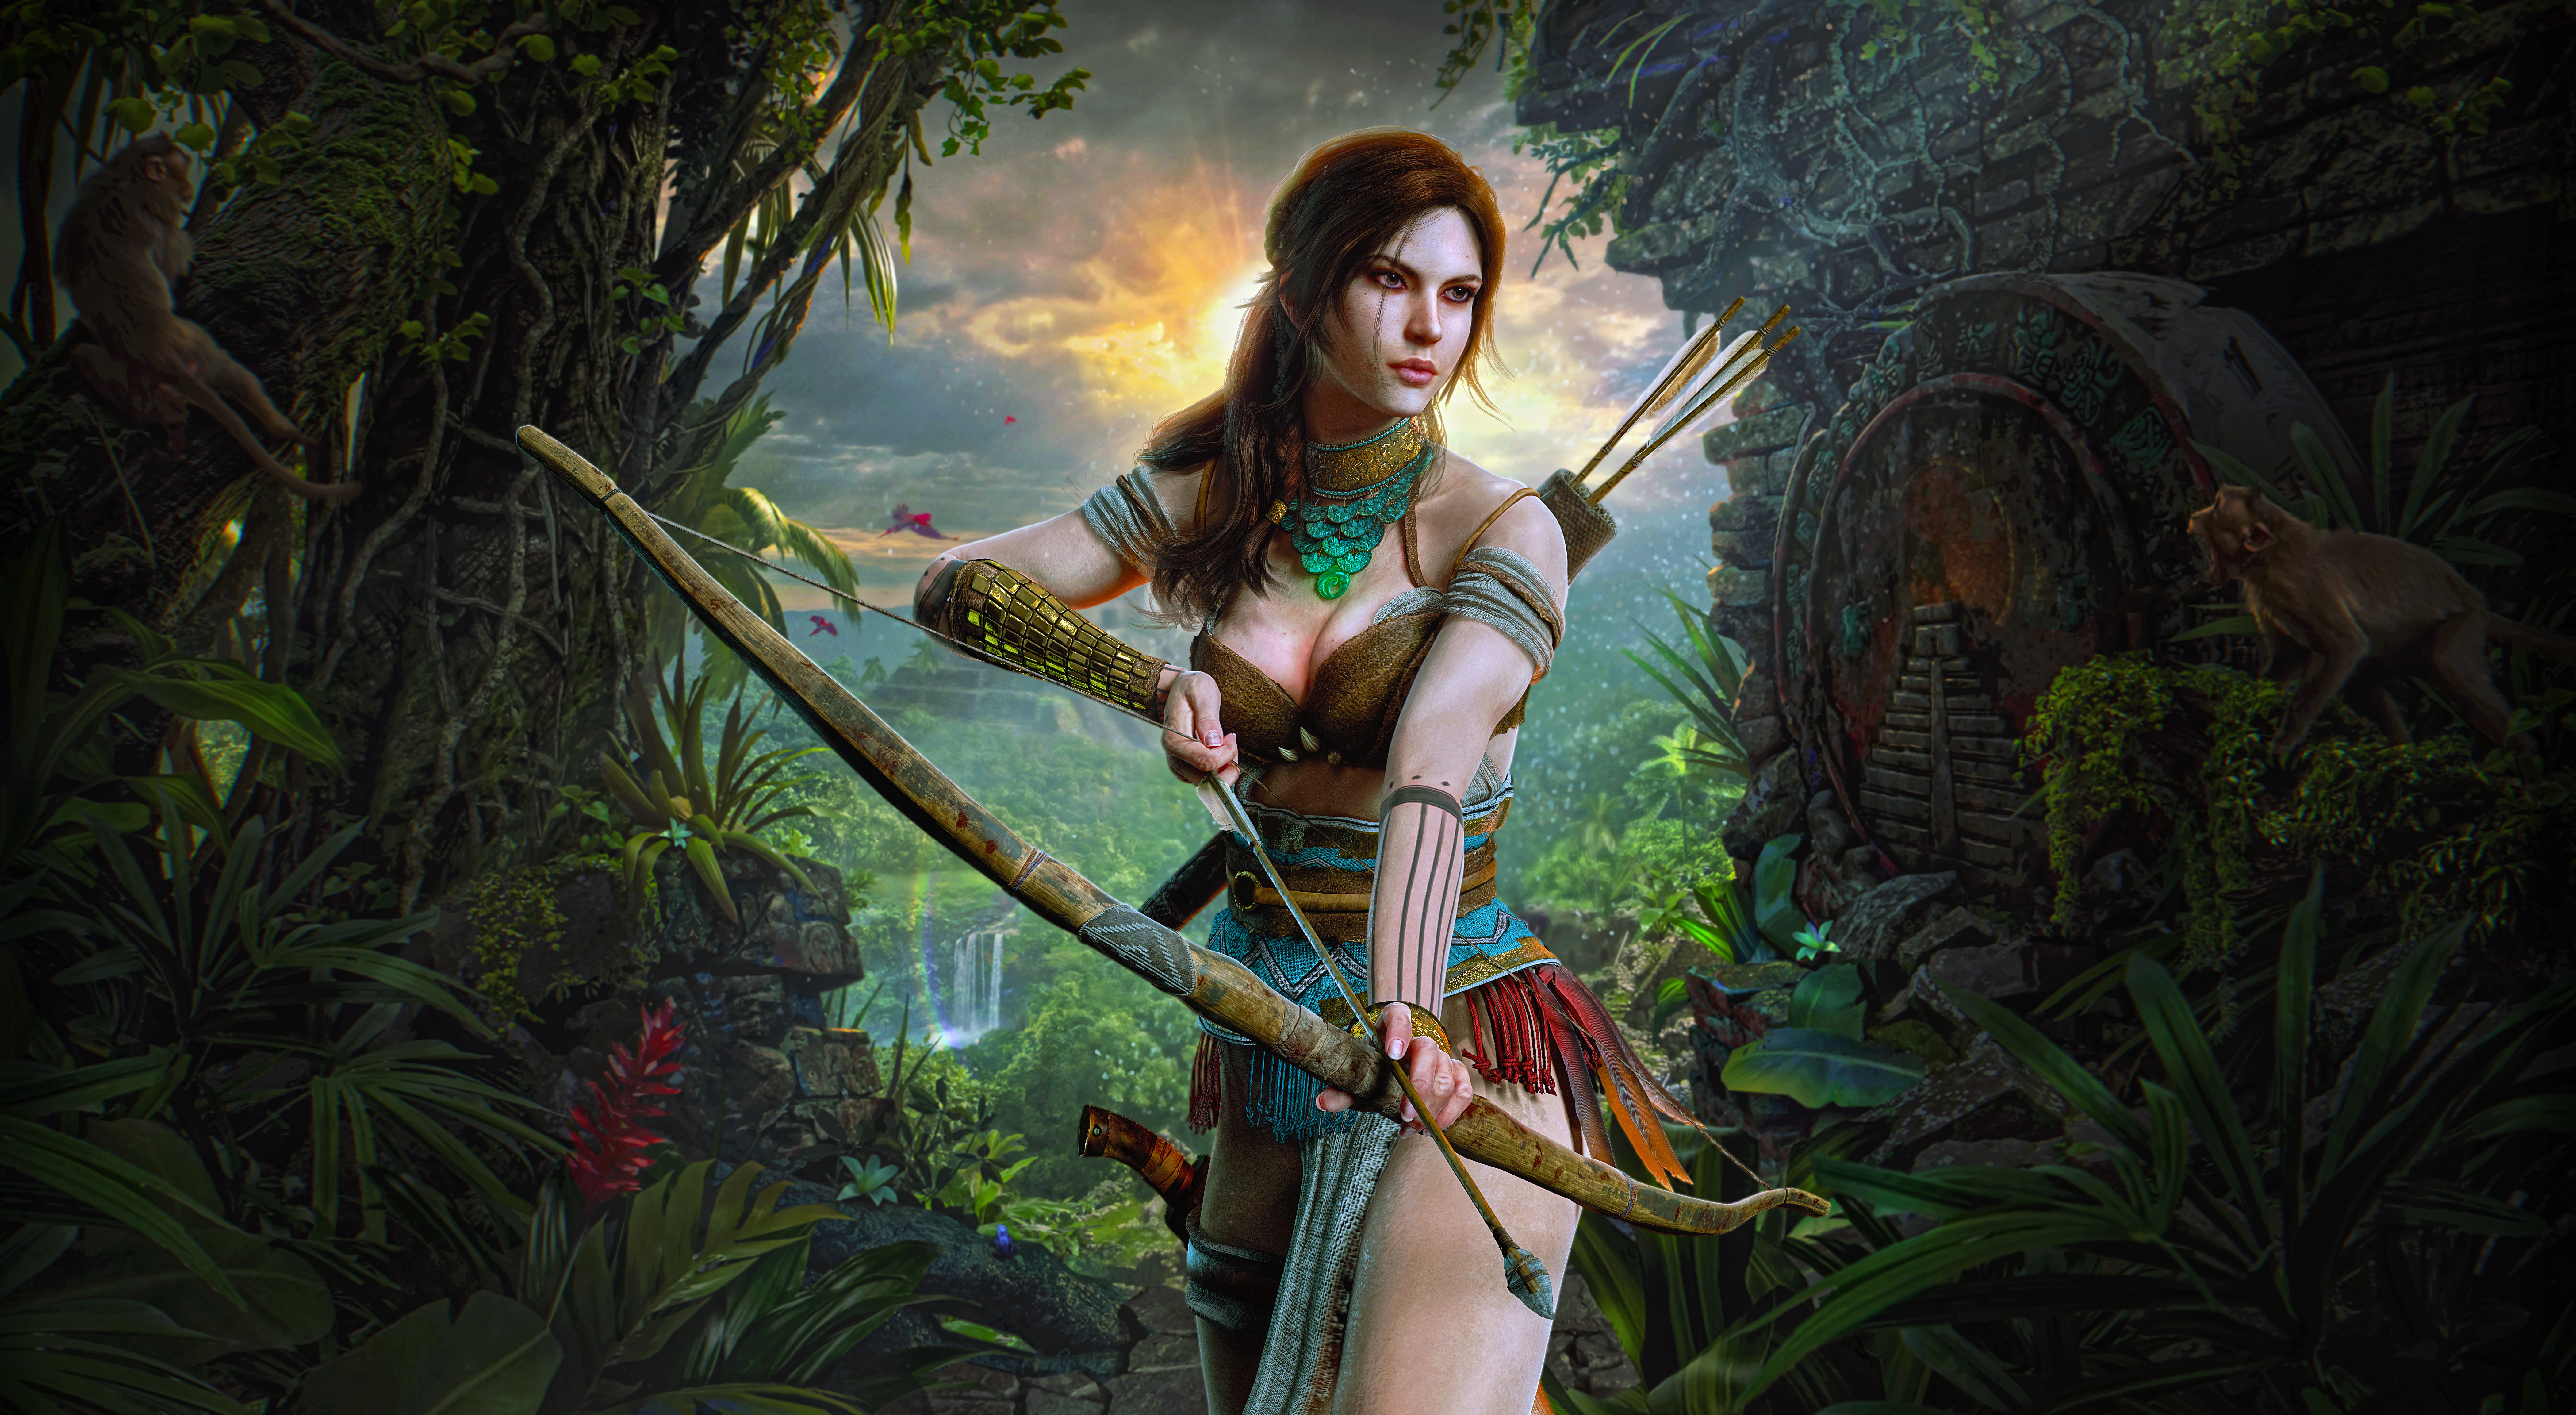 100+] Lara Croft Iphone Wallpapers | Wallpapers.com